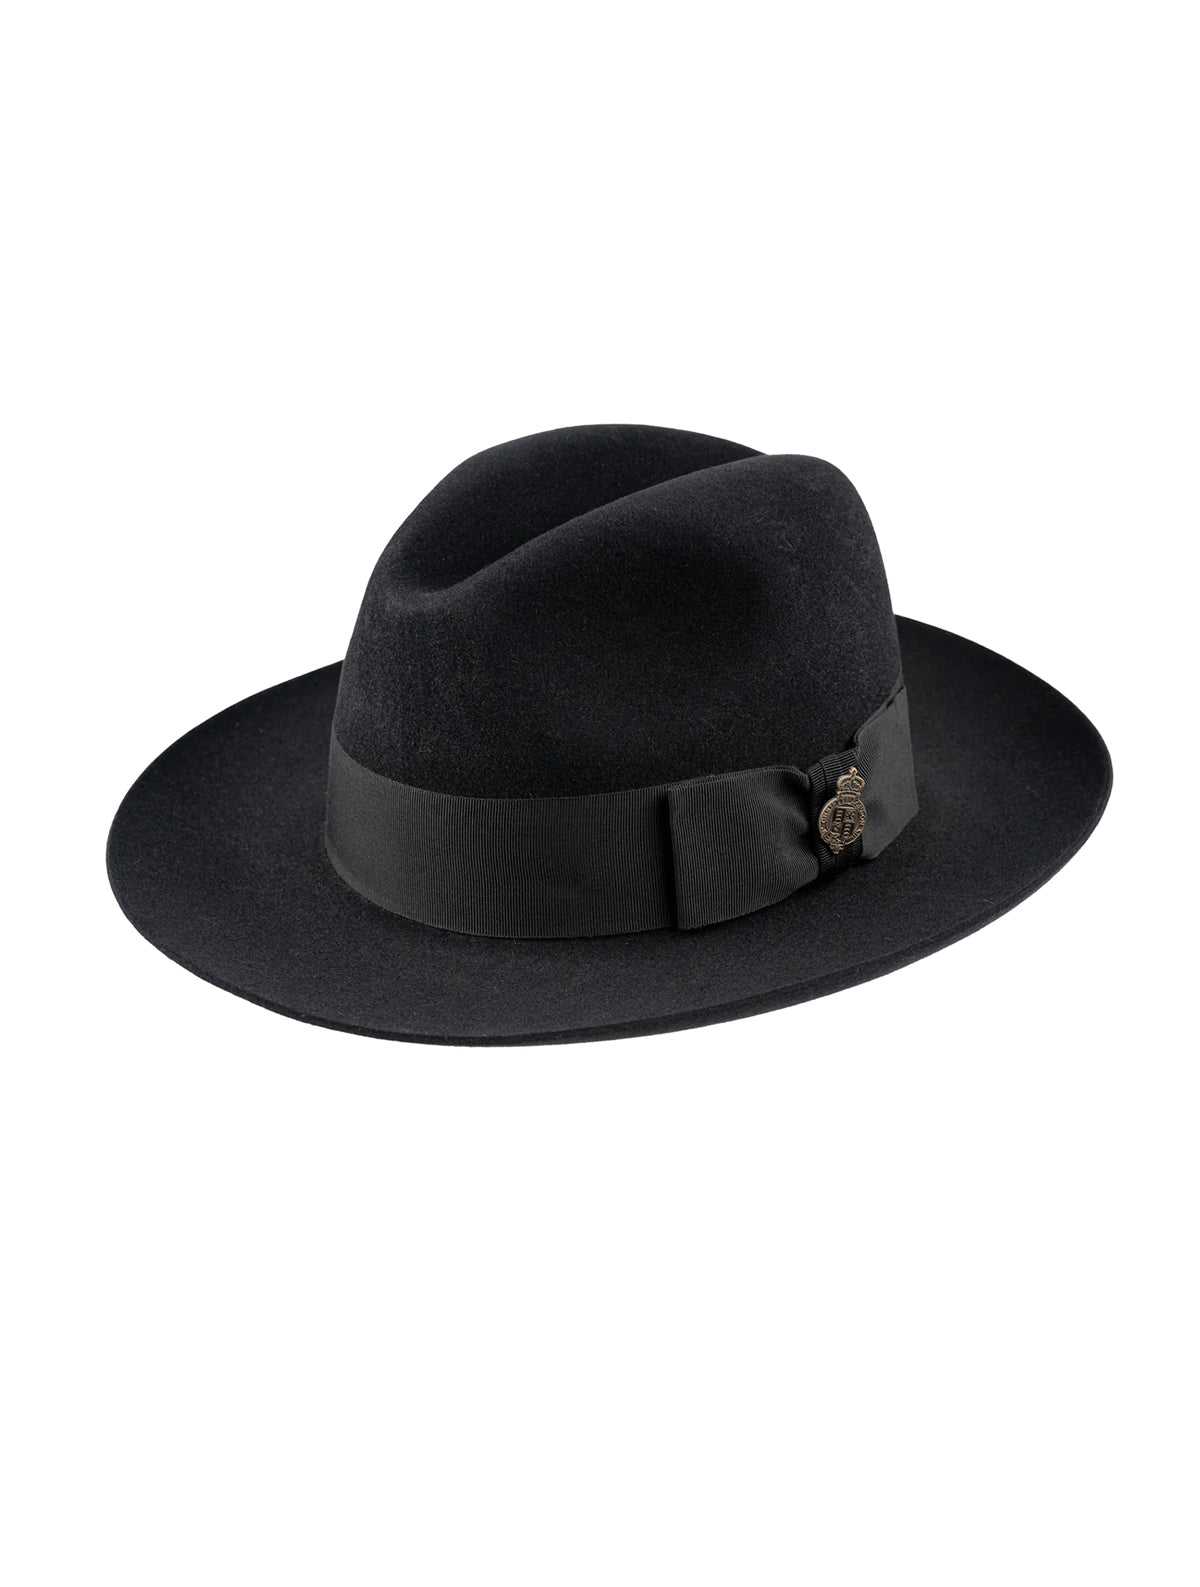 Christys' Classic Felt Fedora Hat - Black